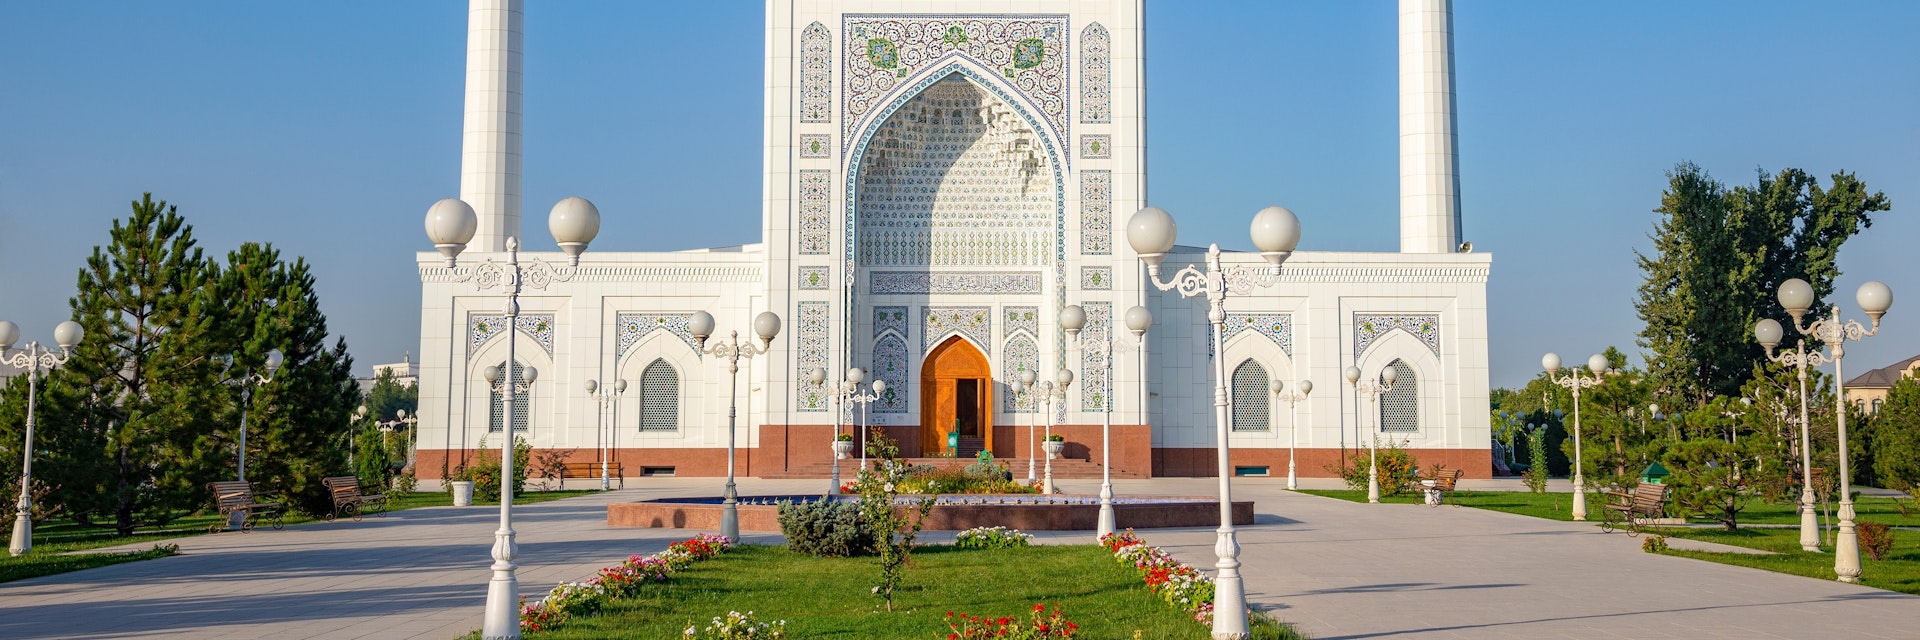 Minor Mosque, Tashkent, Uzbekistan.